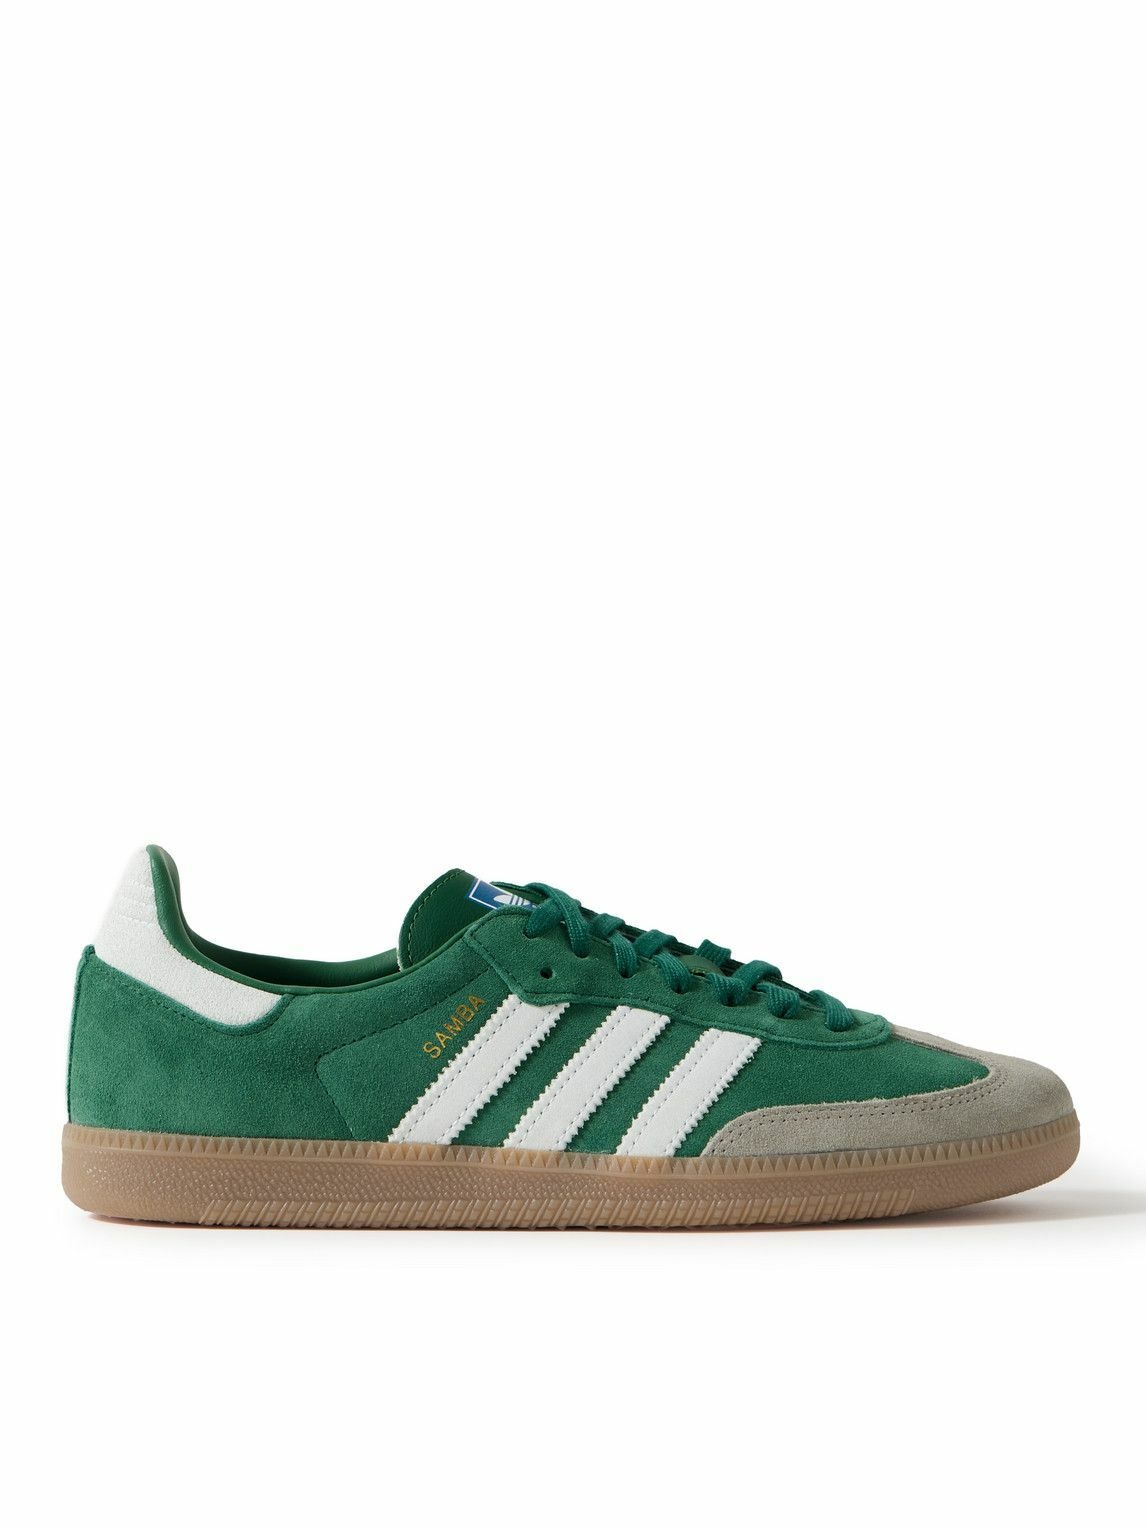 adidas Originals - Samba OG Leather-Trimmed Suede Sneakers - Green ...